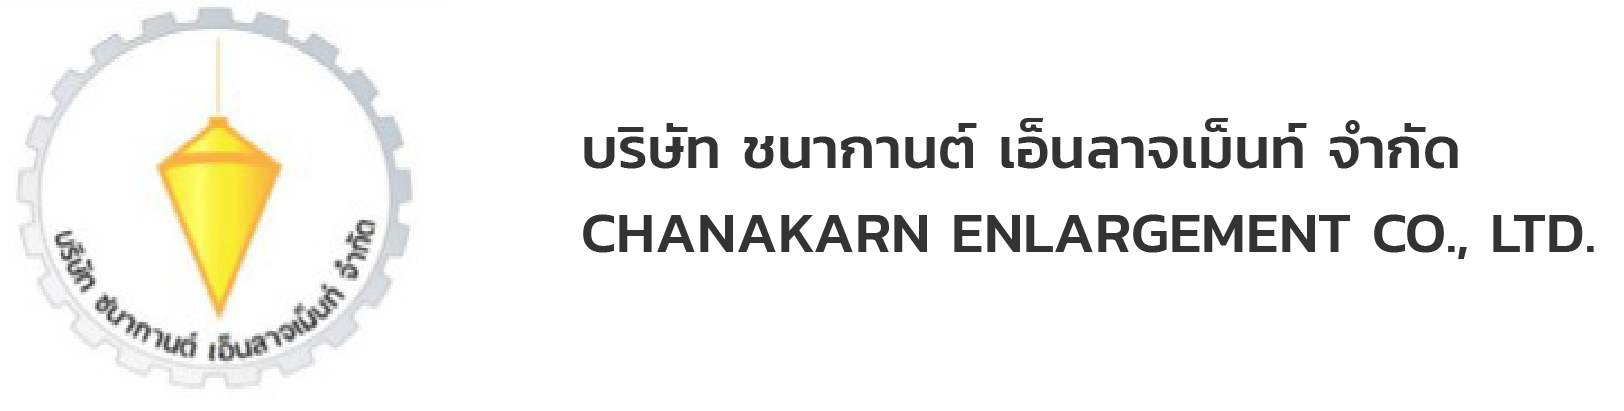 CHANAKARN ENLARGEMENT CO., LTD.